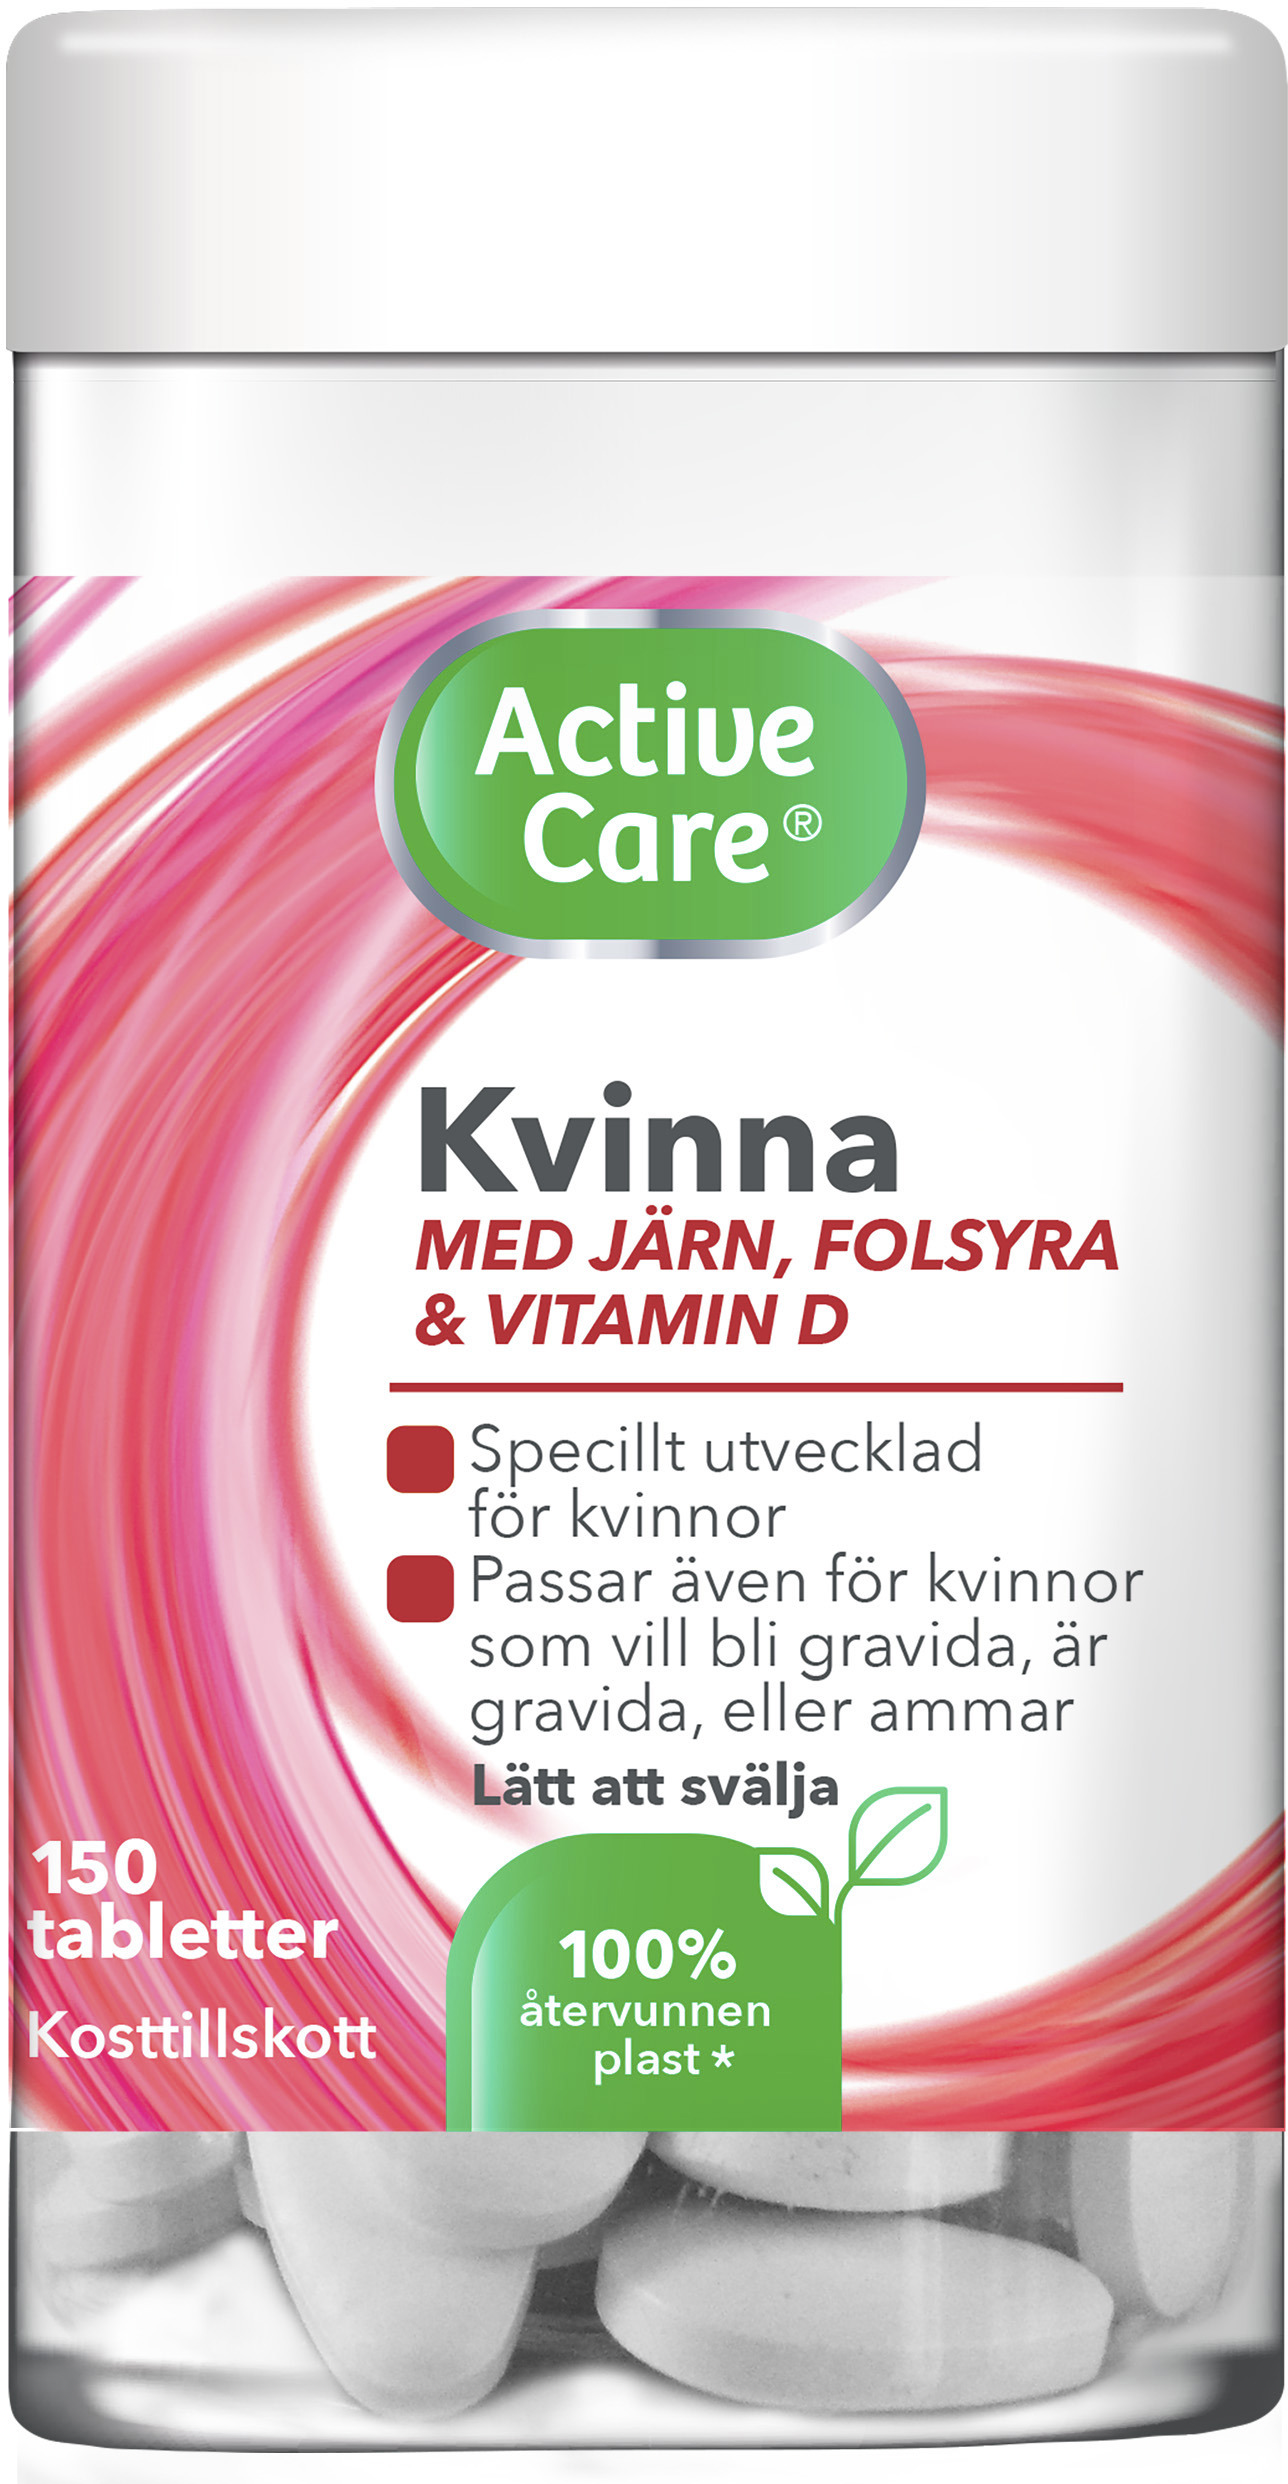 Active Care Kvinna 150 tabletter